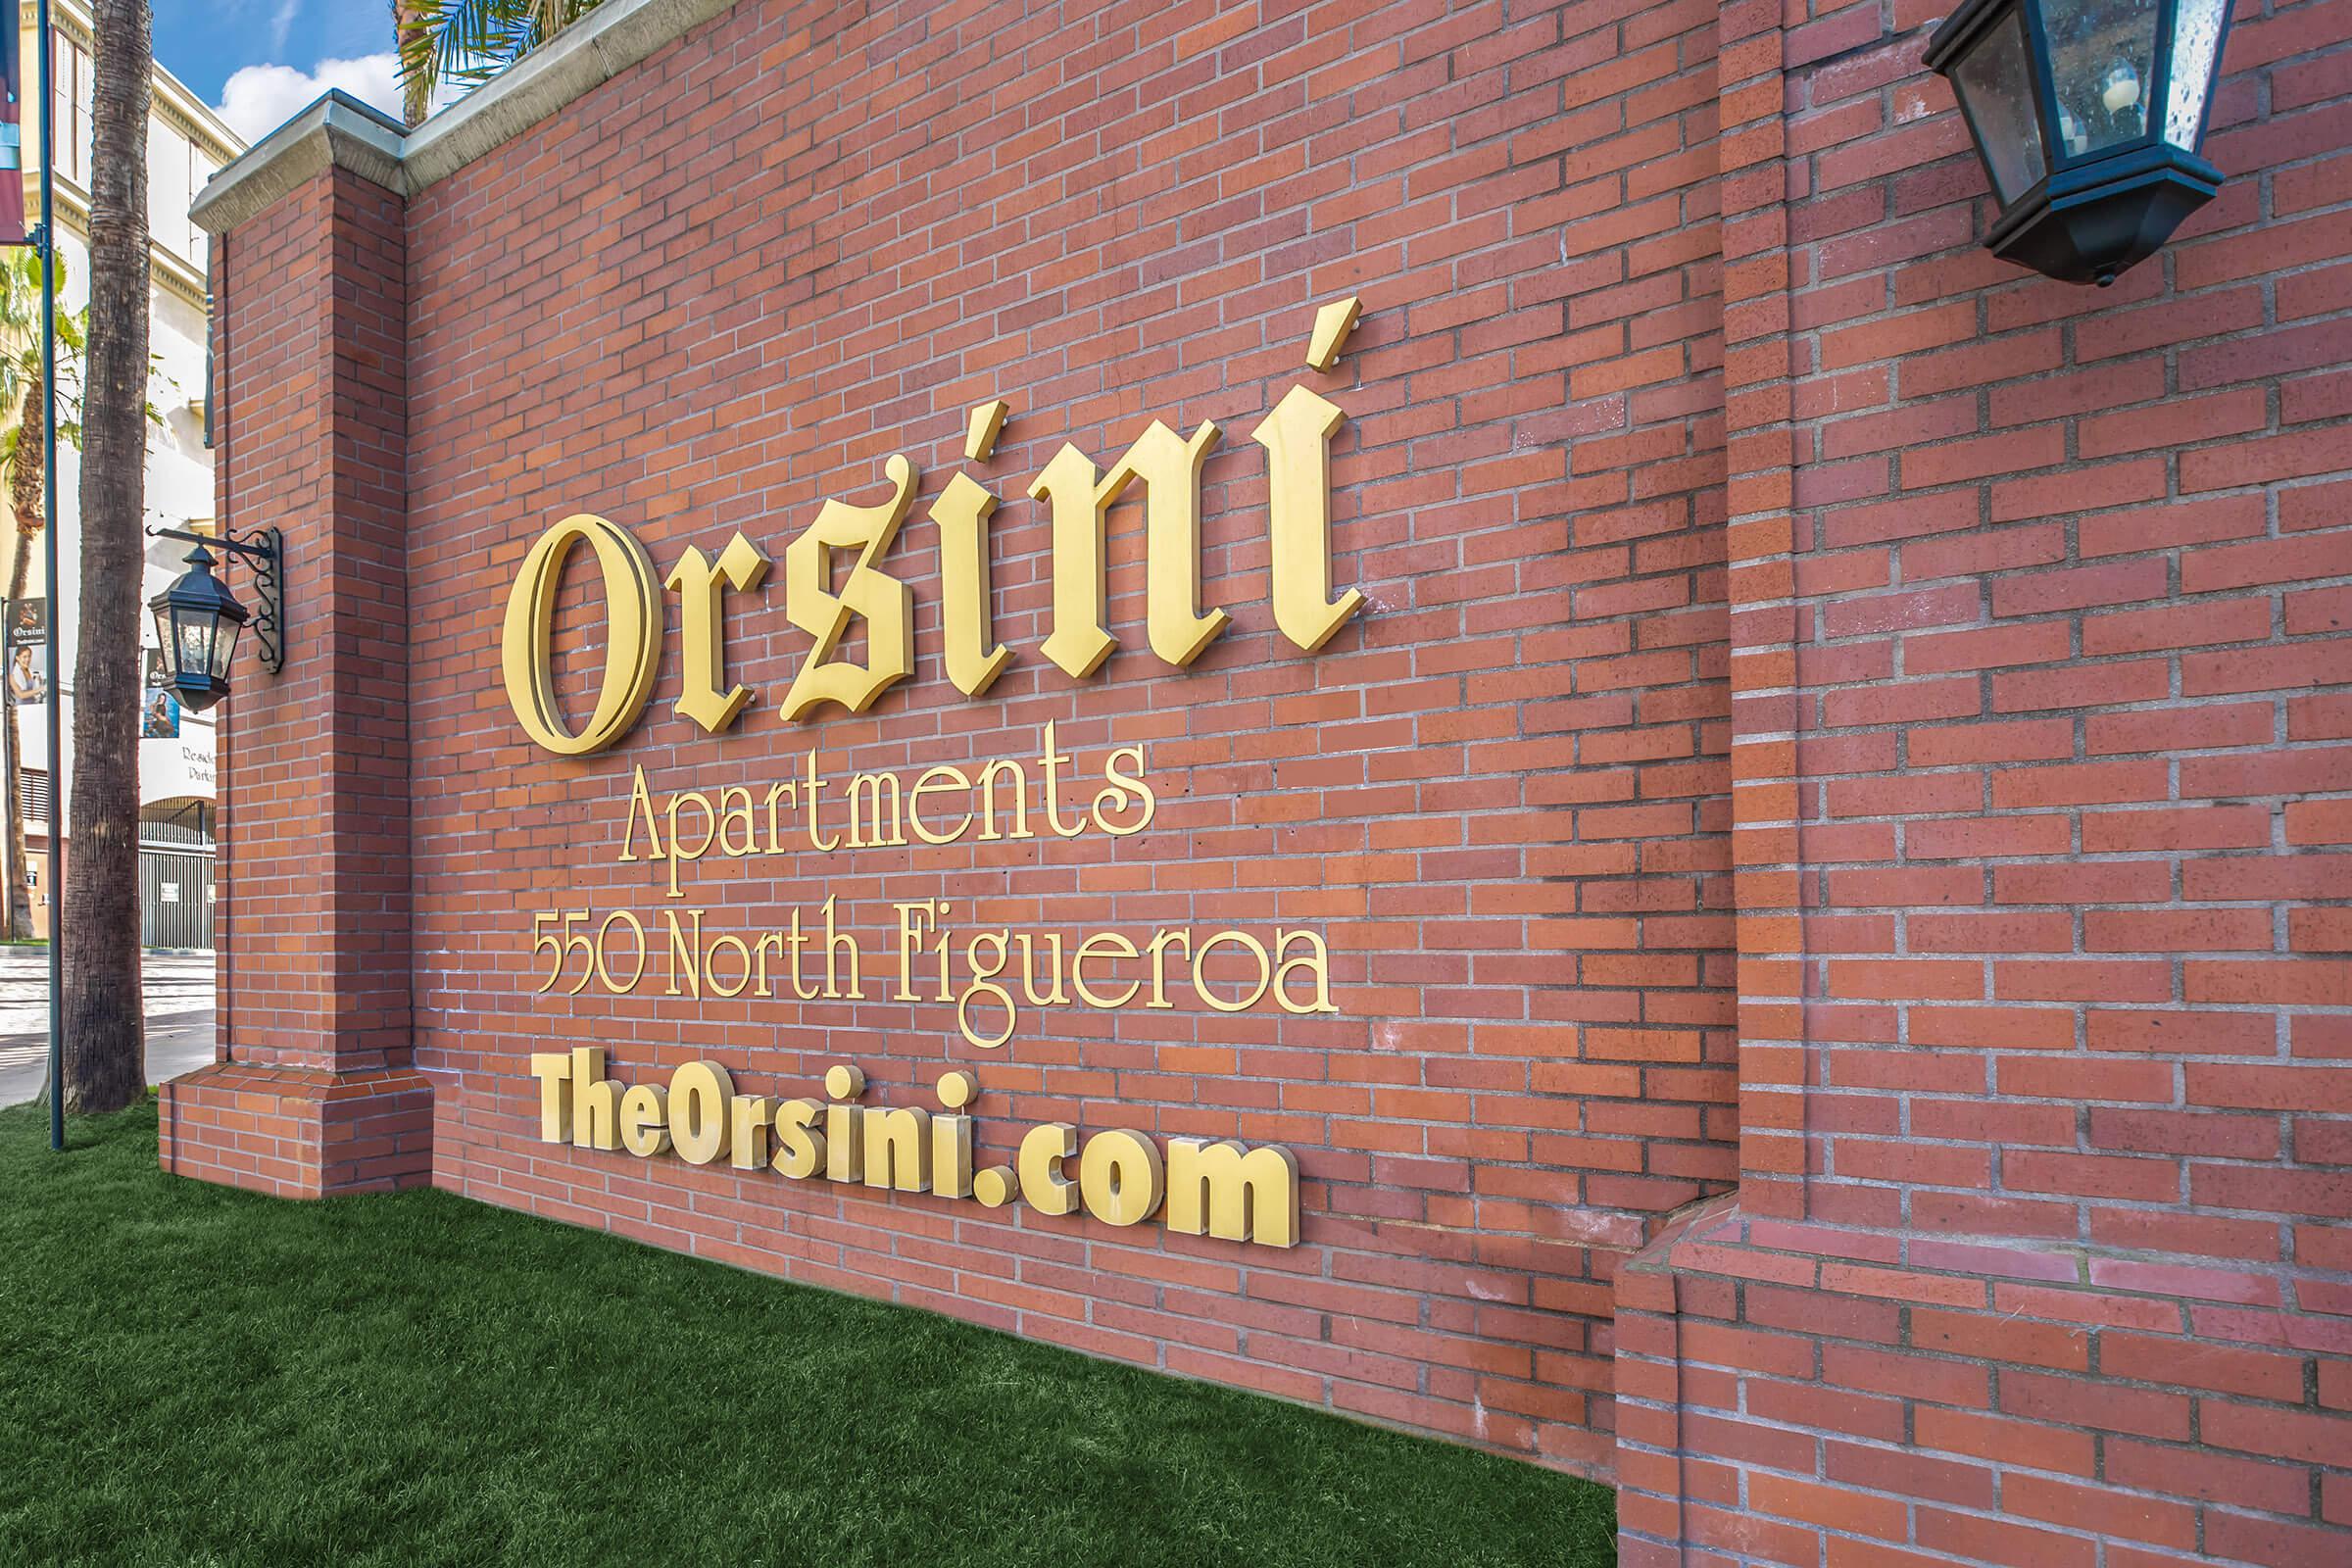 The Orsini monument sign